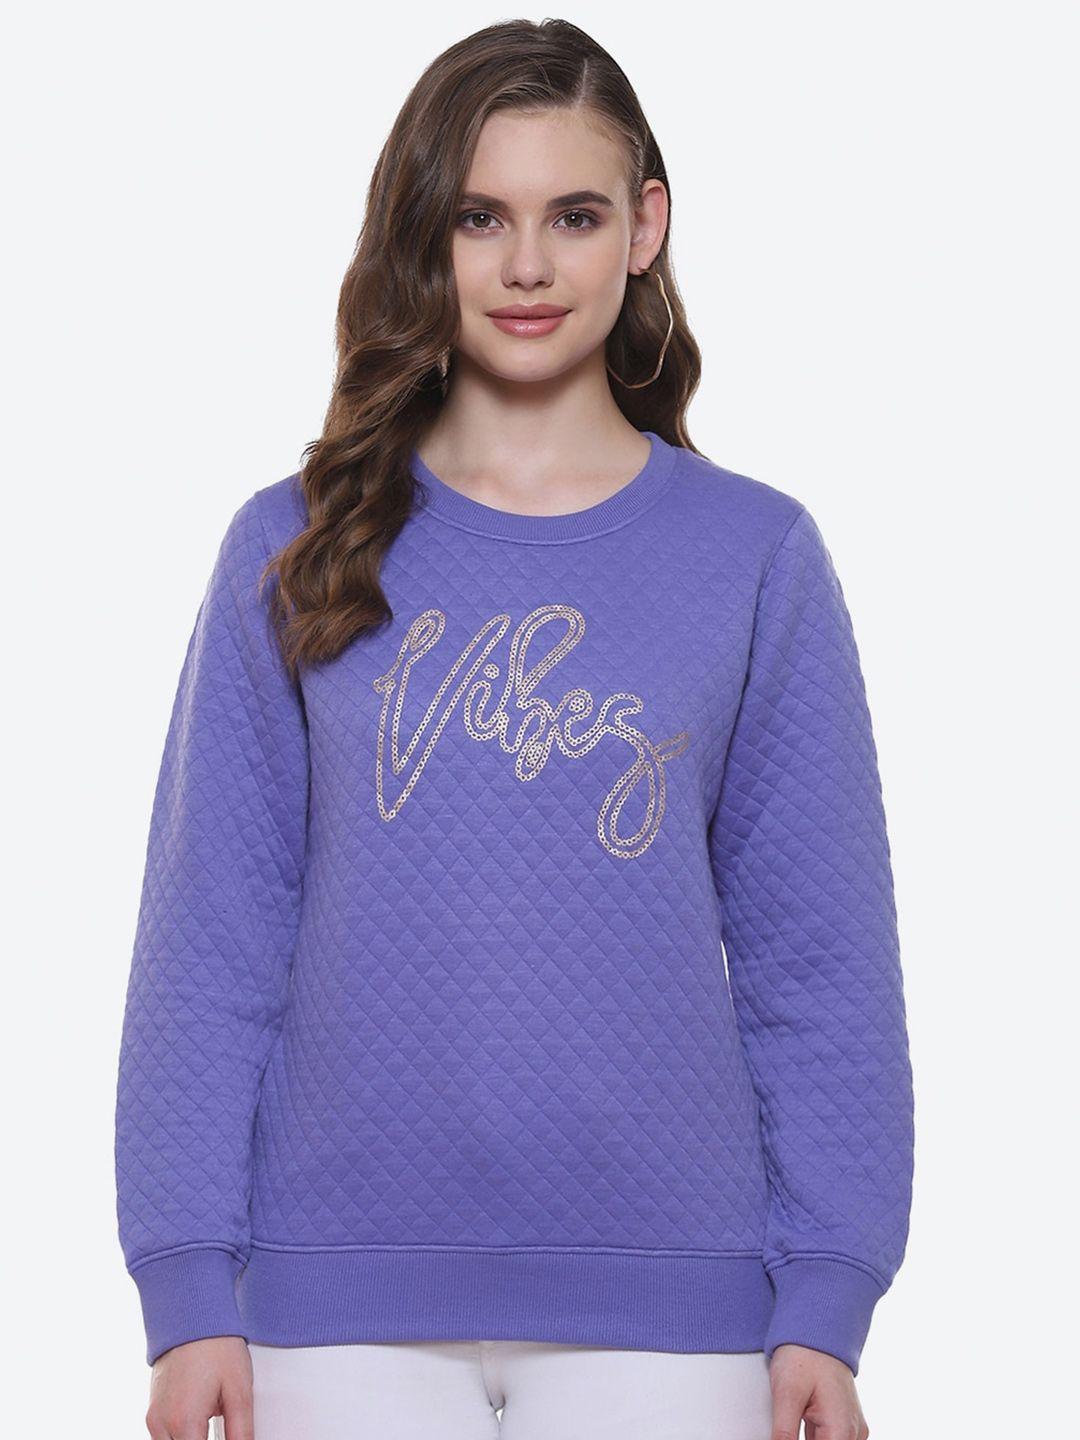 2bme geometric self design cotton pullover sweatshirt